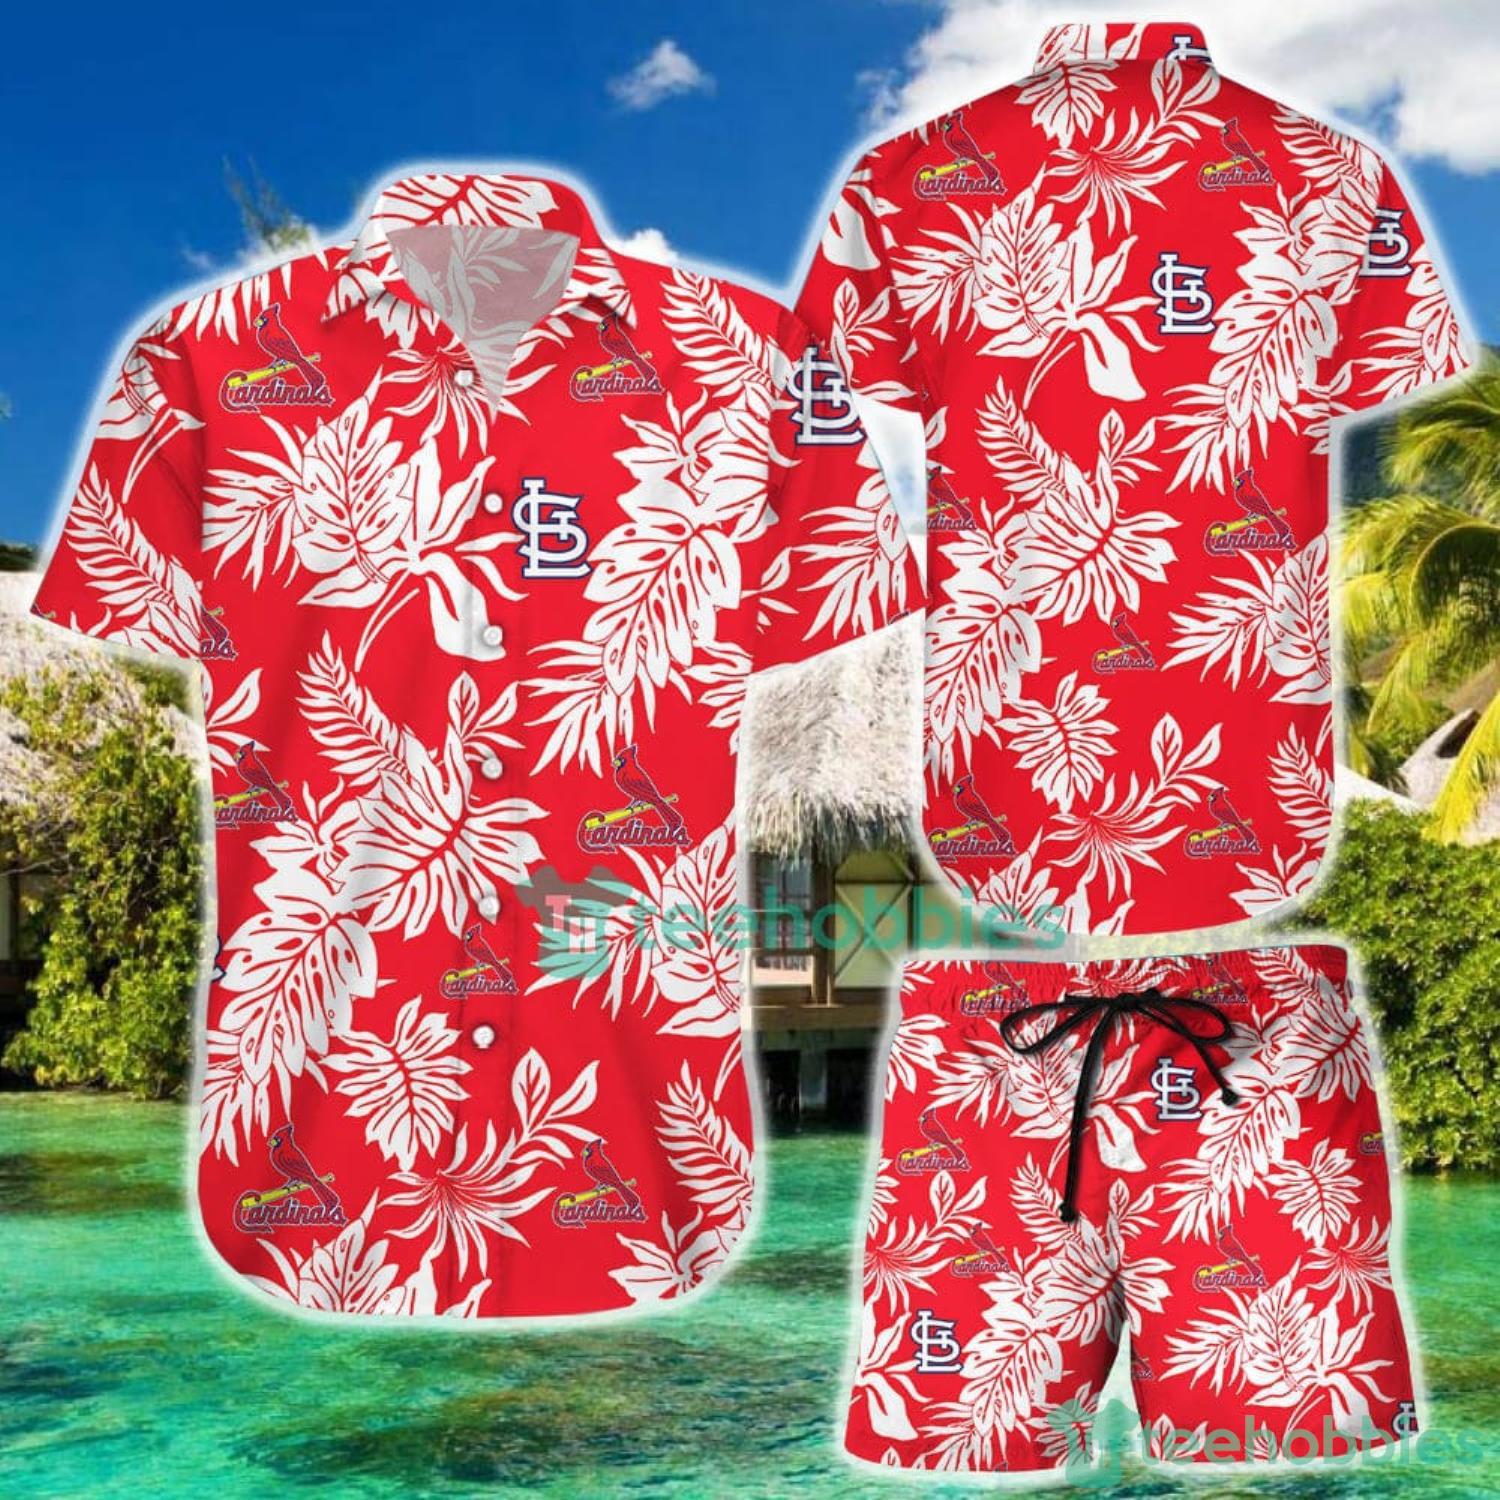 St. Louis Cardinals Aloha Mlb Hawaiian Shirt And Short